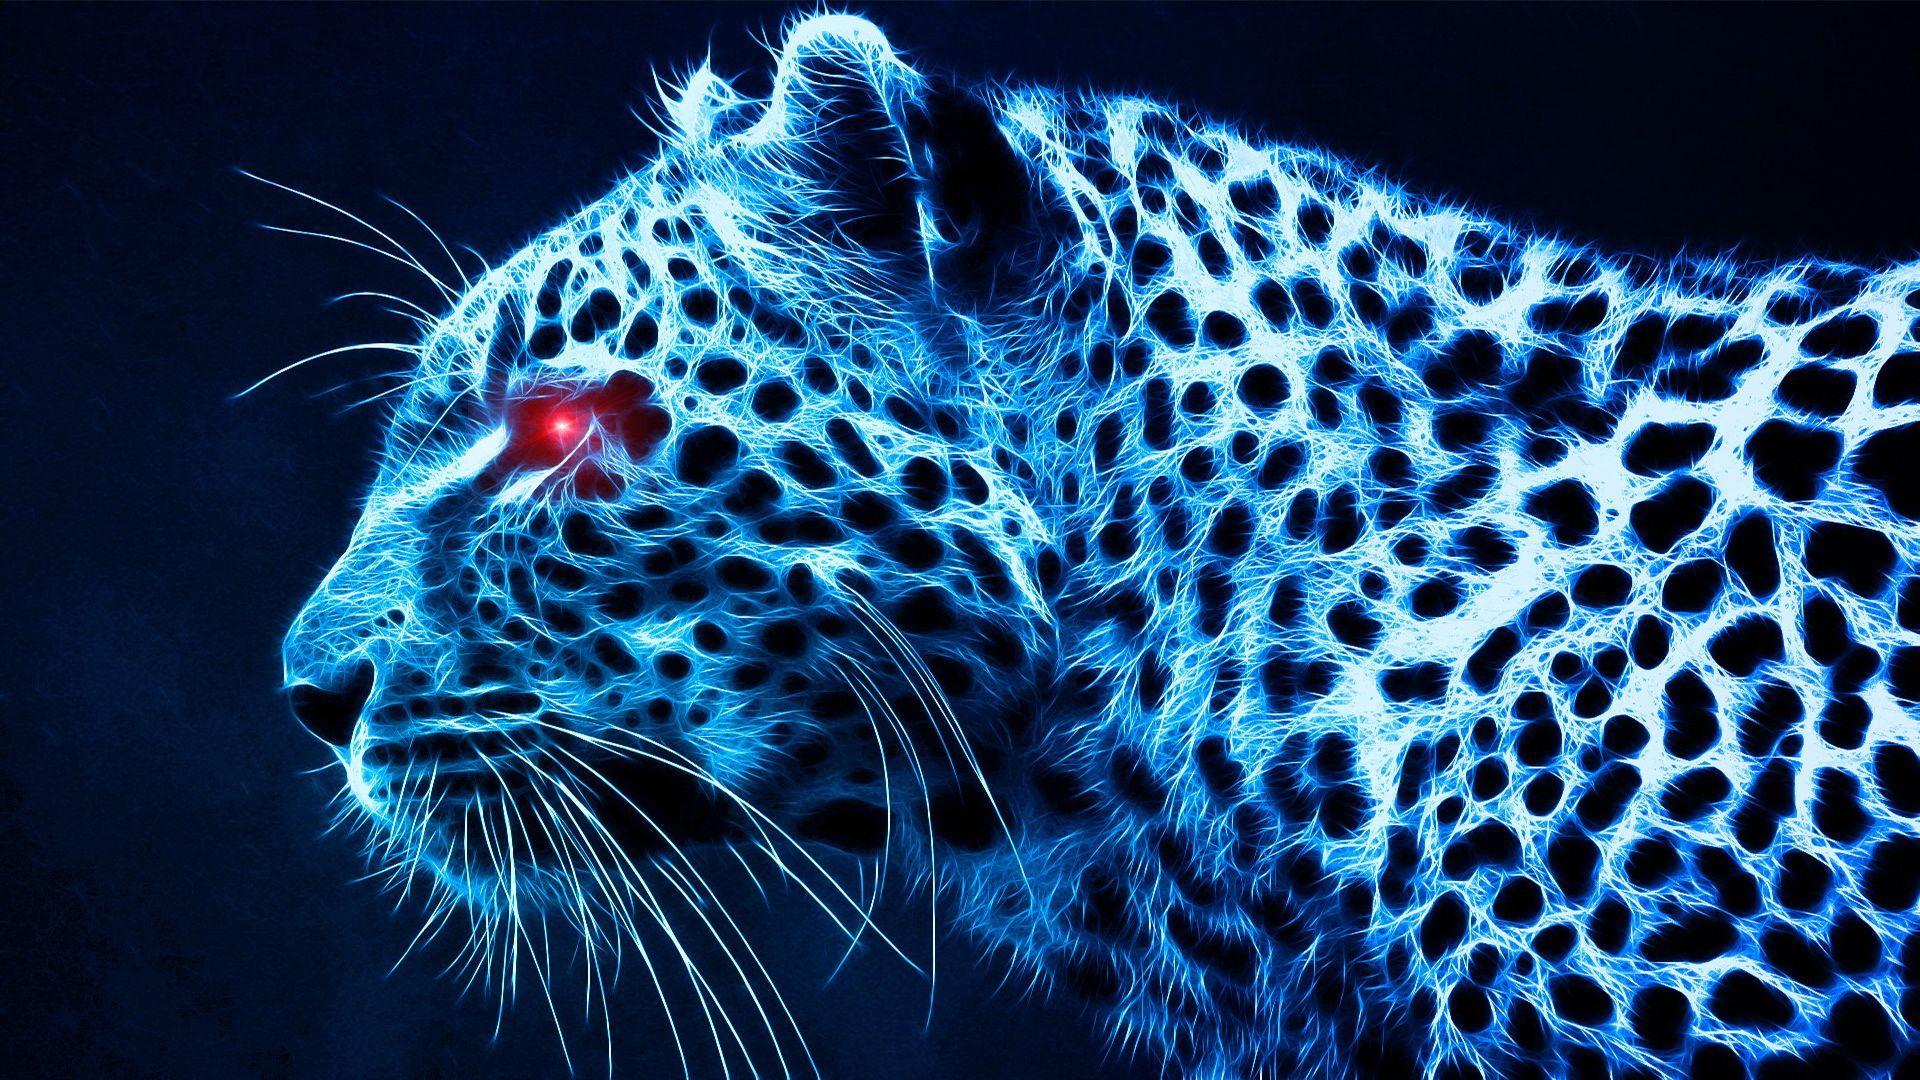 Cheetah Wallpaper Free Download. Leopard wallpaper, Tiger wallpaper, Cheetah wallpaper